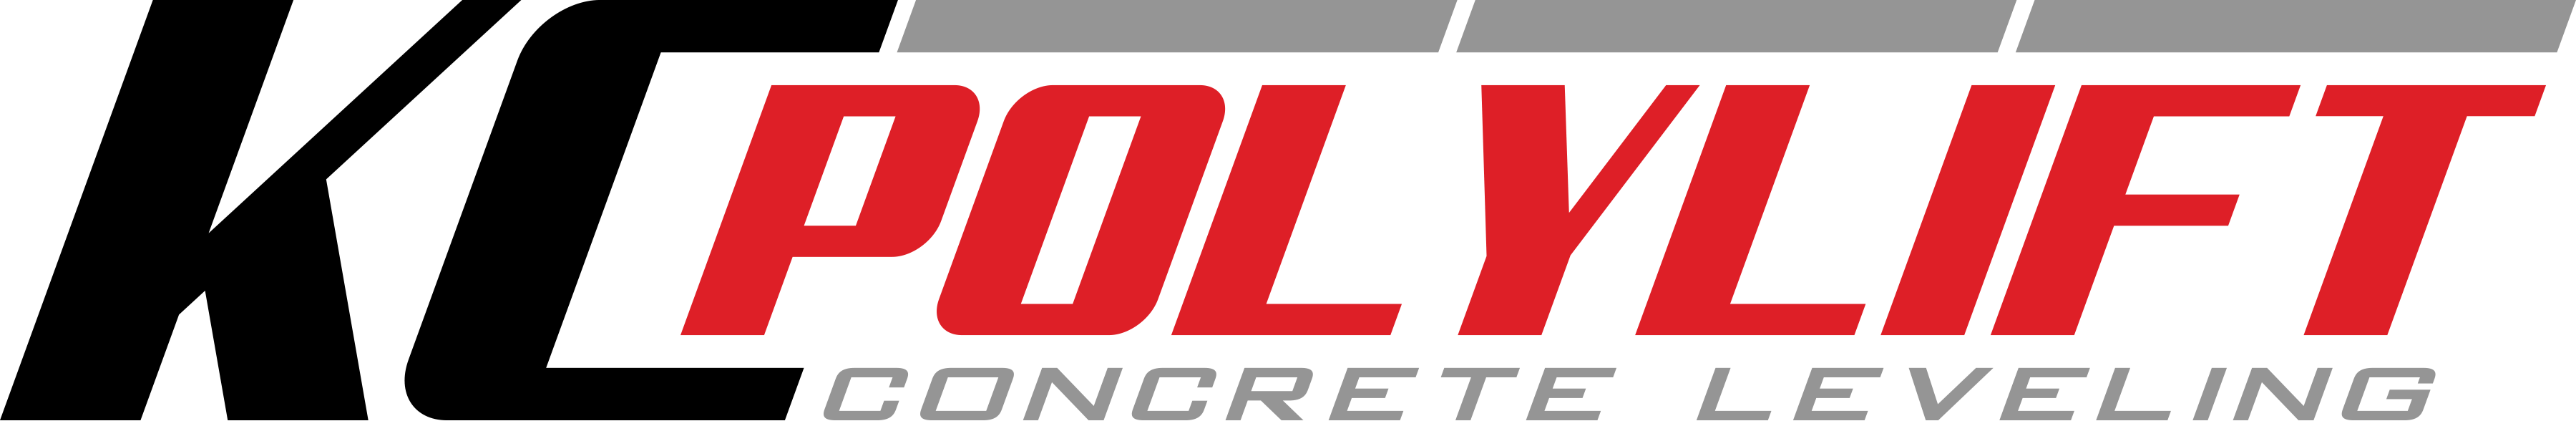 KC Polylift Logo